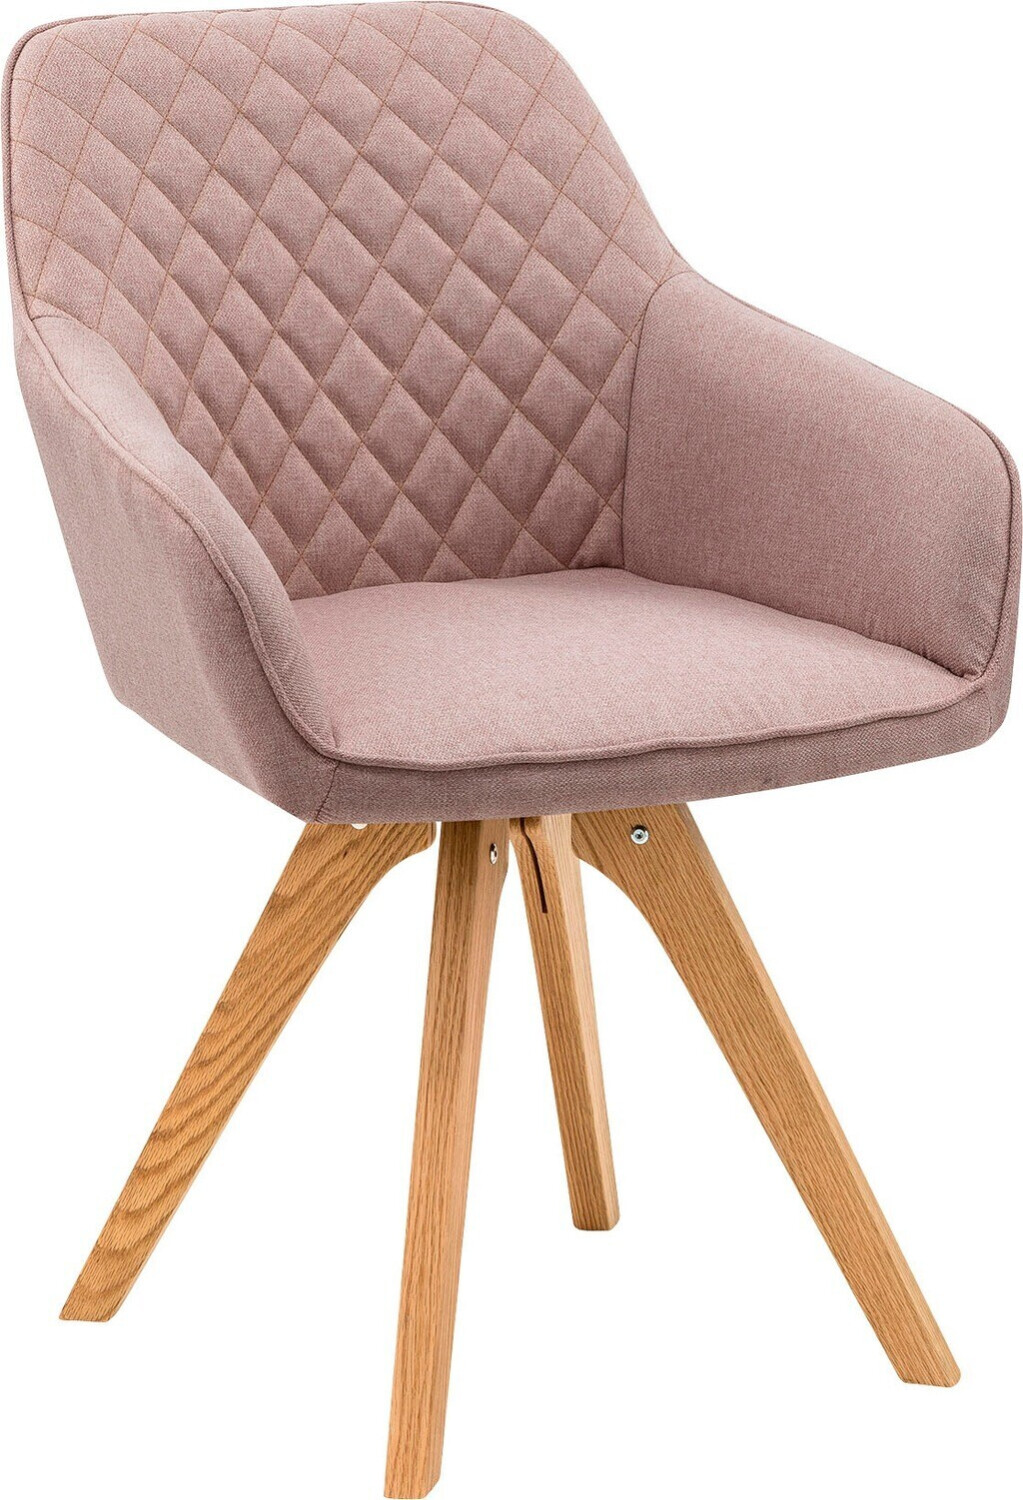 SalesFever Sitzgruppe 5tlg. 1.149,00 Preisvergleich Eiche bei + 180x90 (393246) rosa cm grau Stuhl Eiche ab | + € Beine 4x